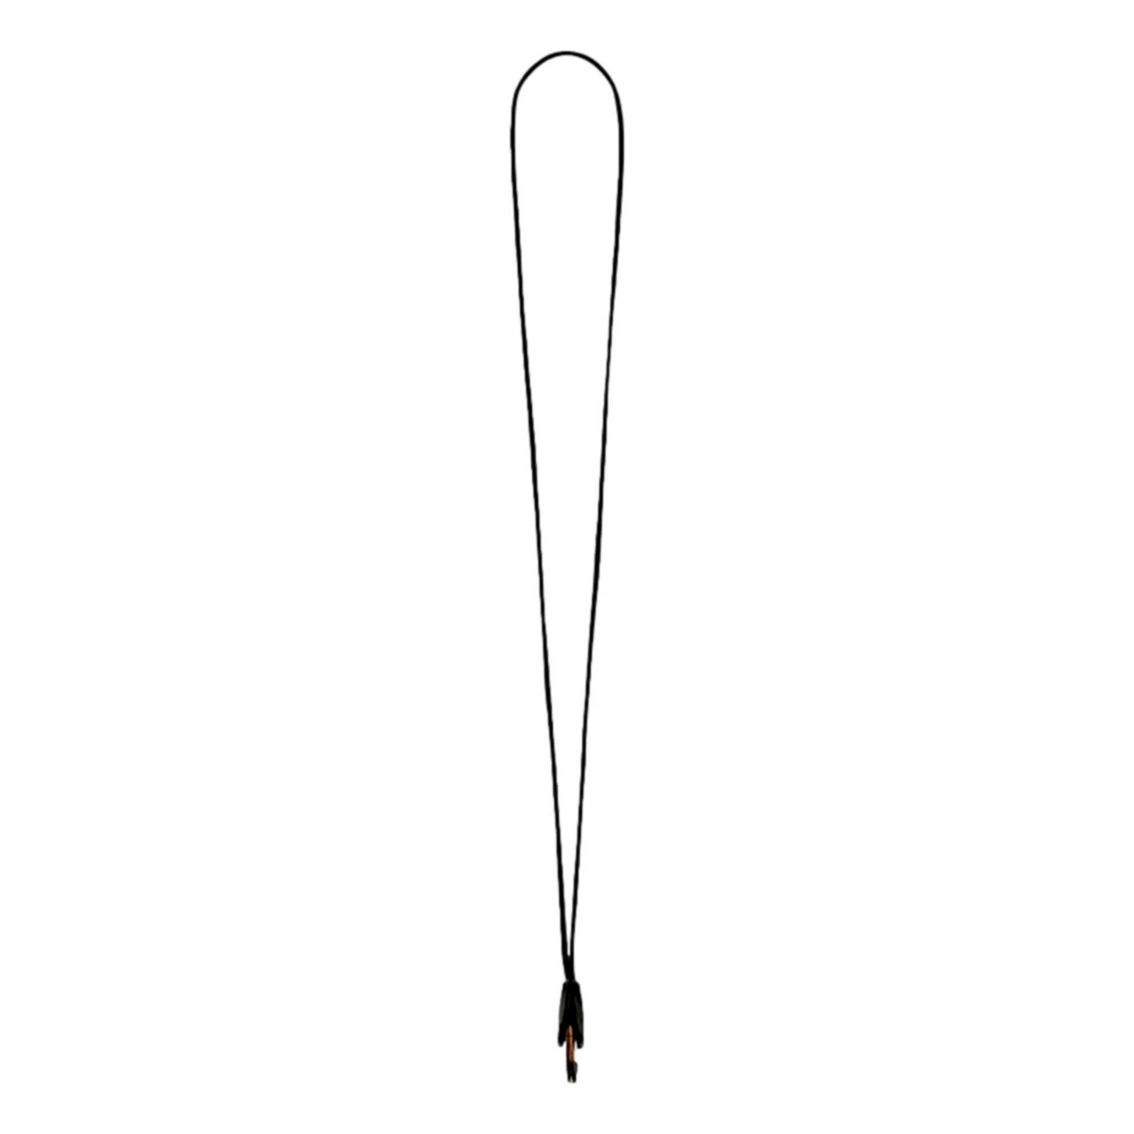 Saint Laurent Black Patent Leather Heart Keyring Necklace (New) - Image 4 of 5